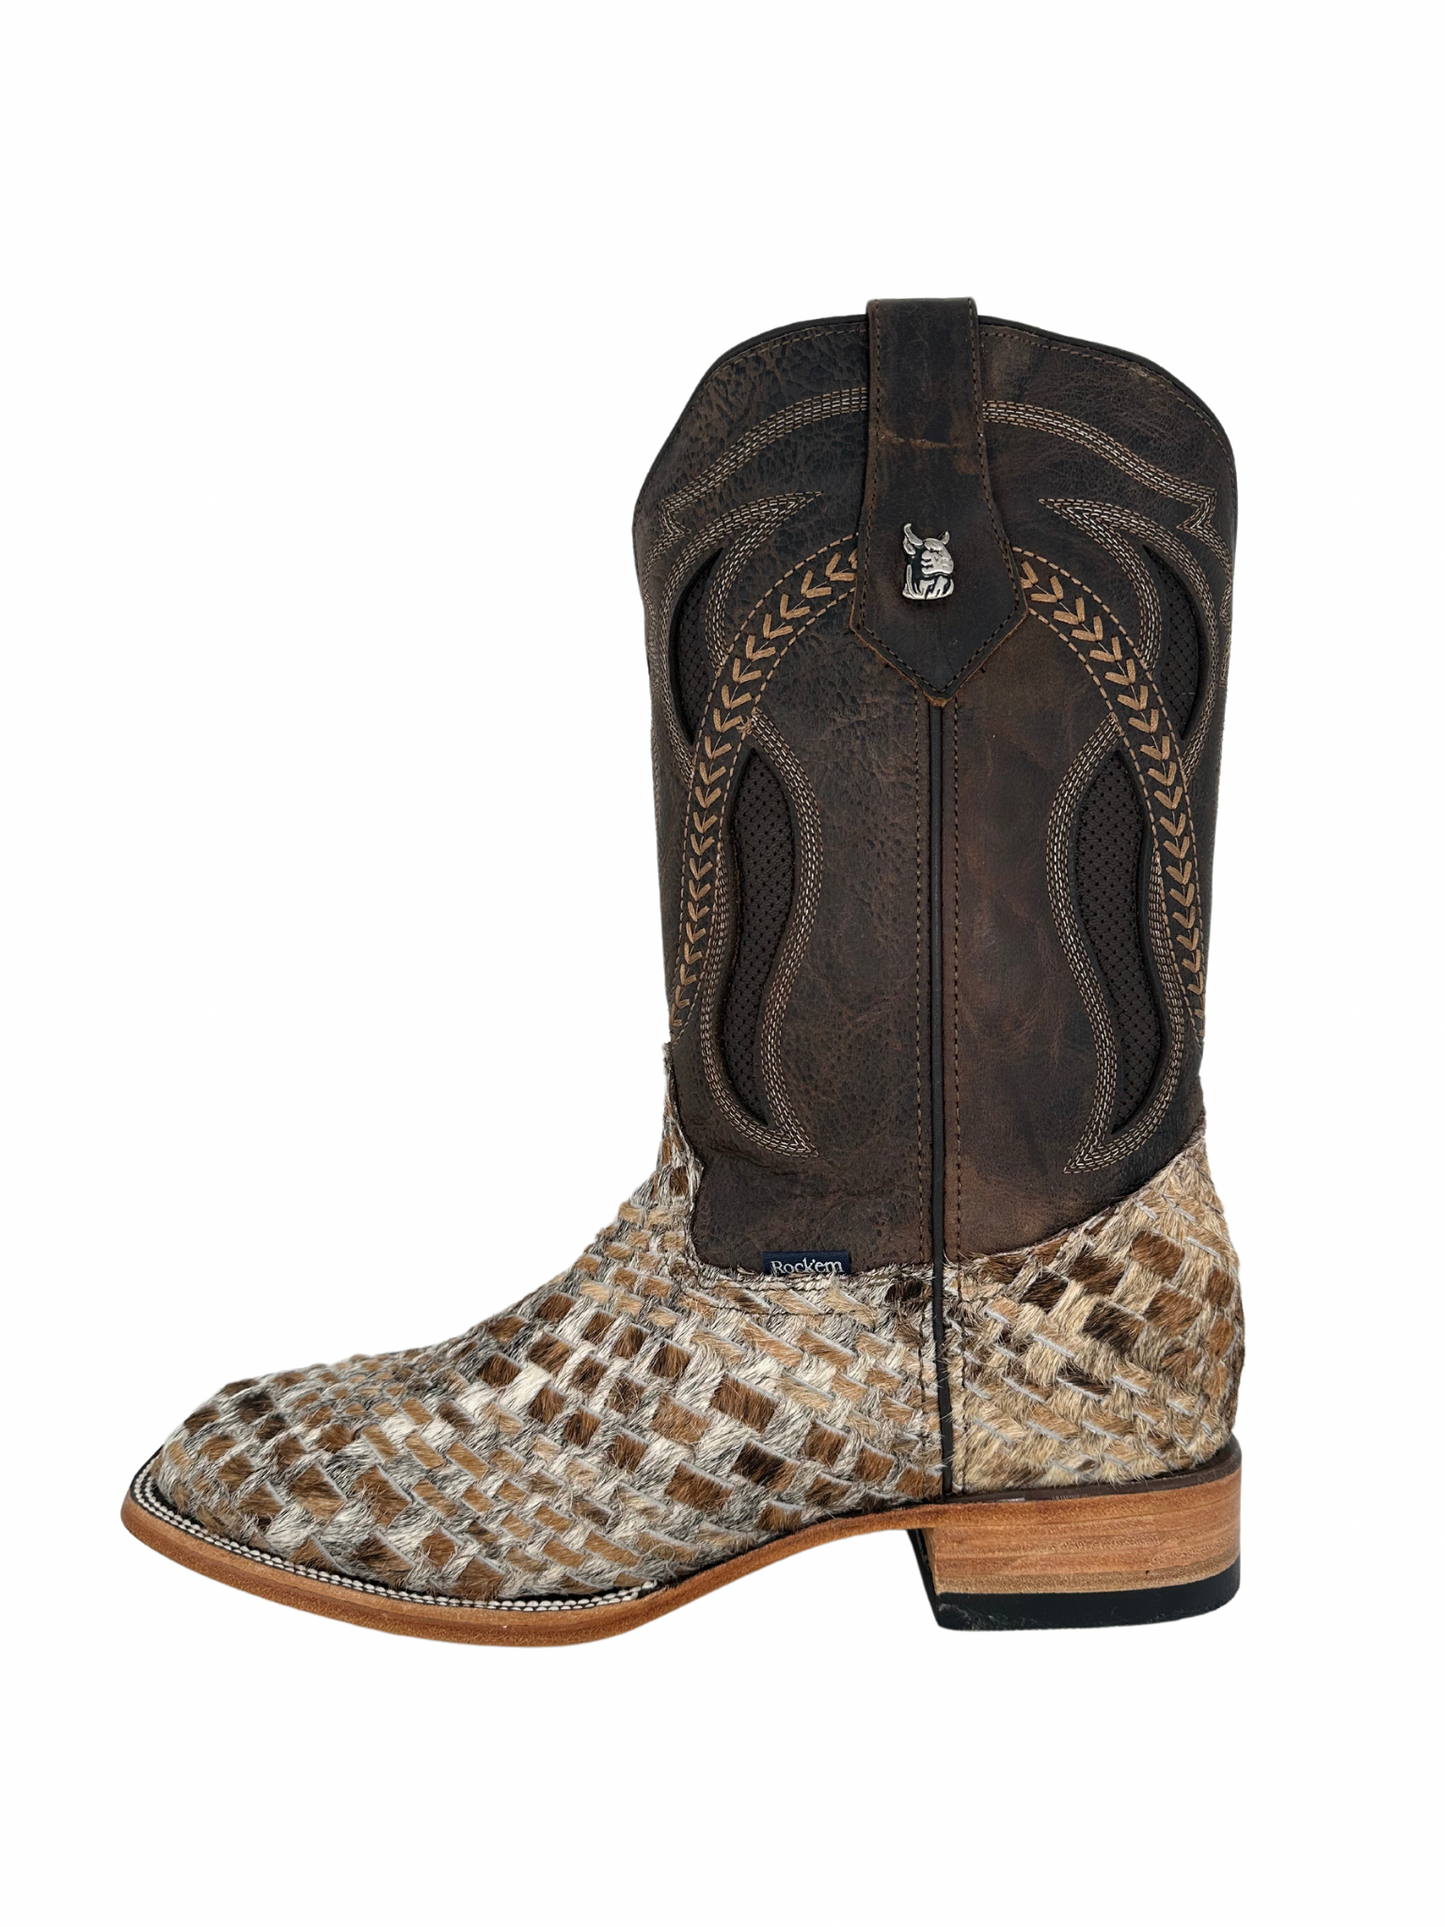 Rock'em Men's Petatillo Cow Hair Boots Size 10.5 *AS SEEN ON IMAGE*